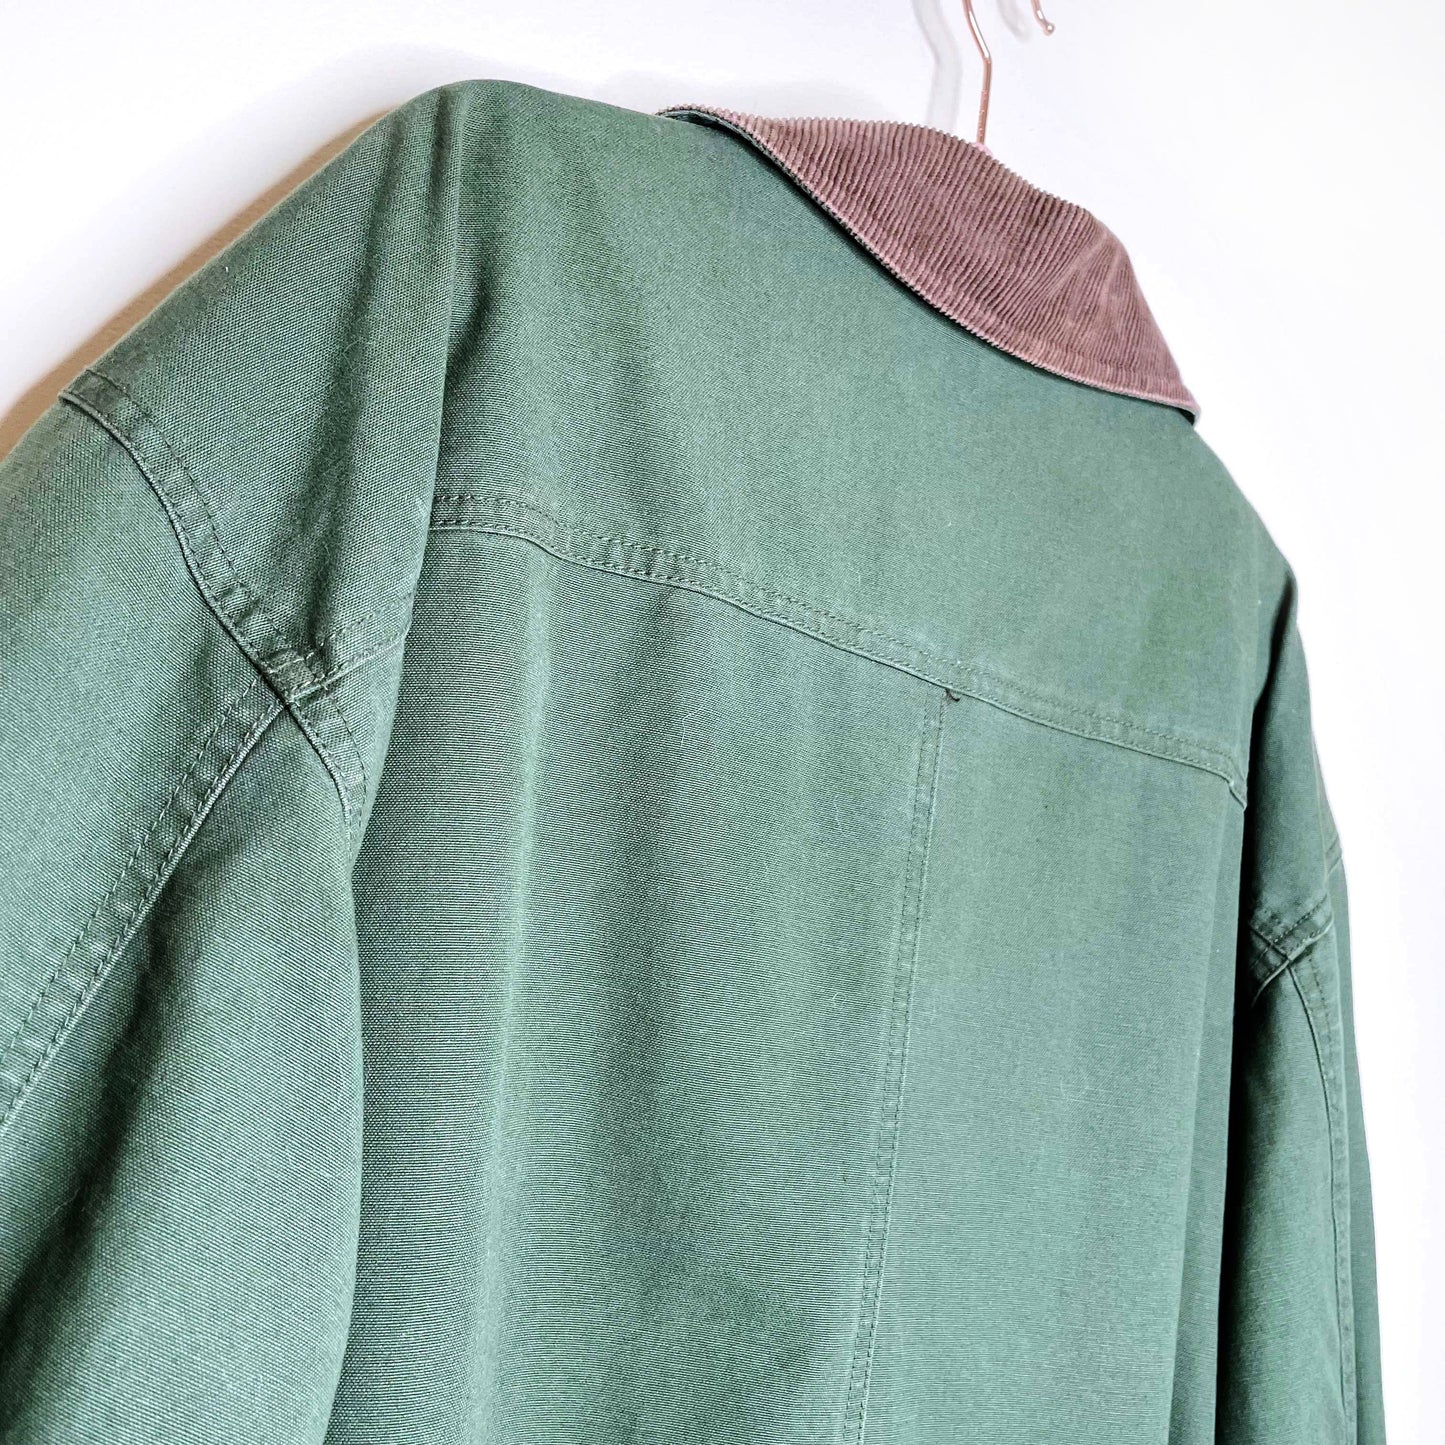 vintage men's ll bean flannel lined field jacket - size xxl tall